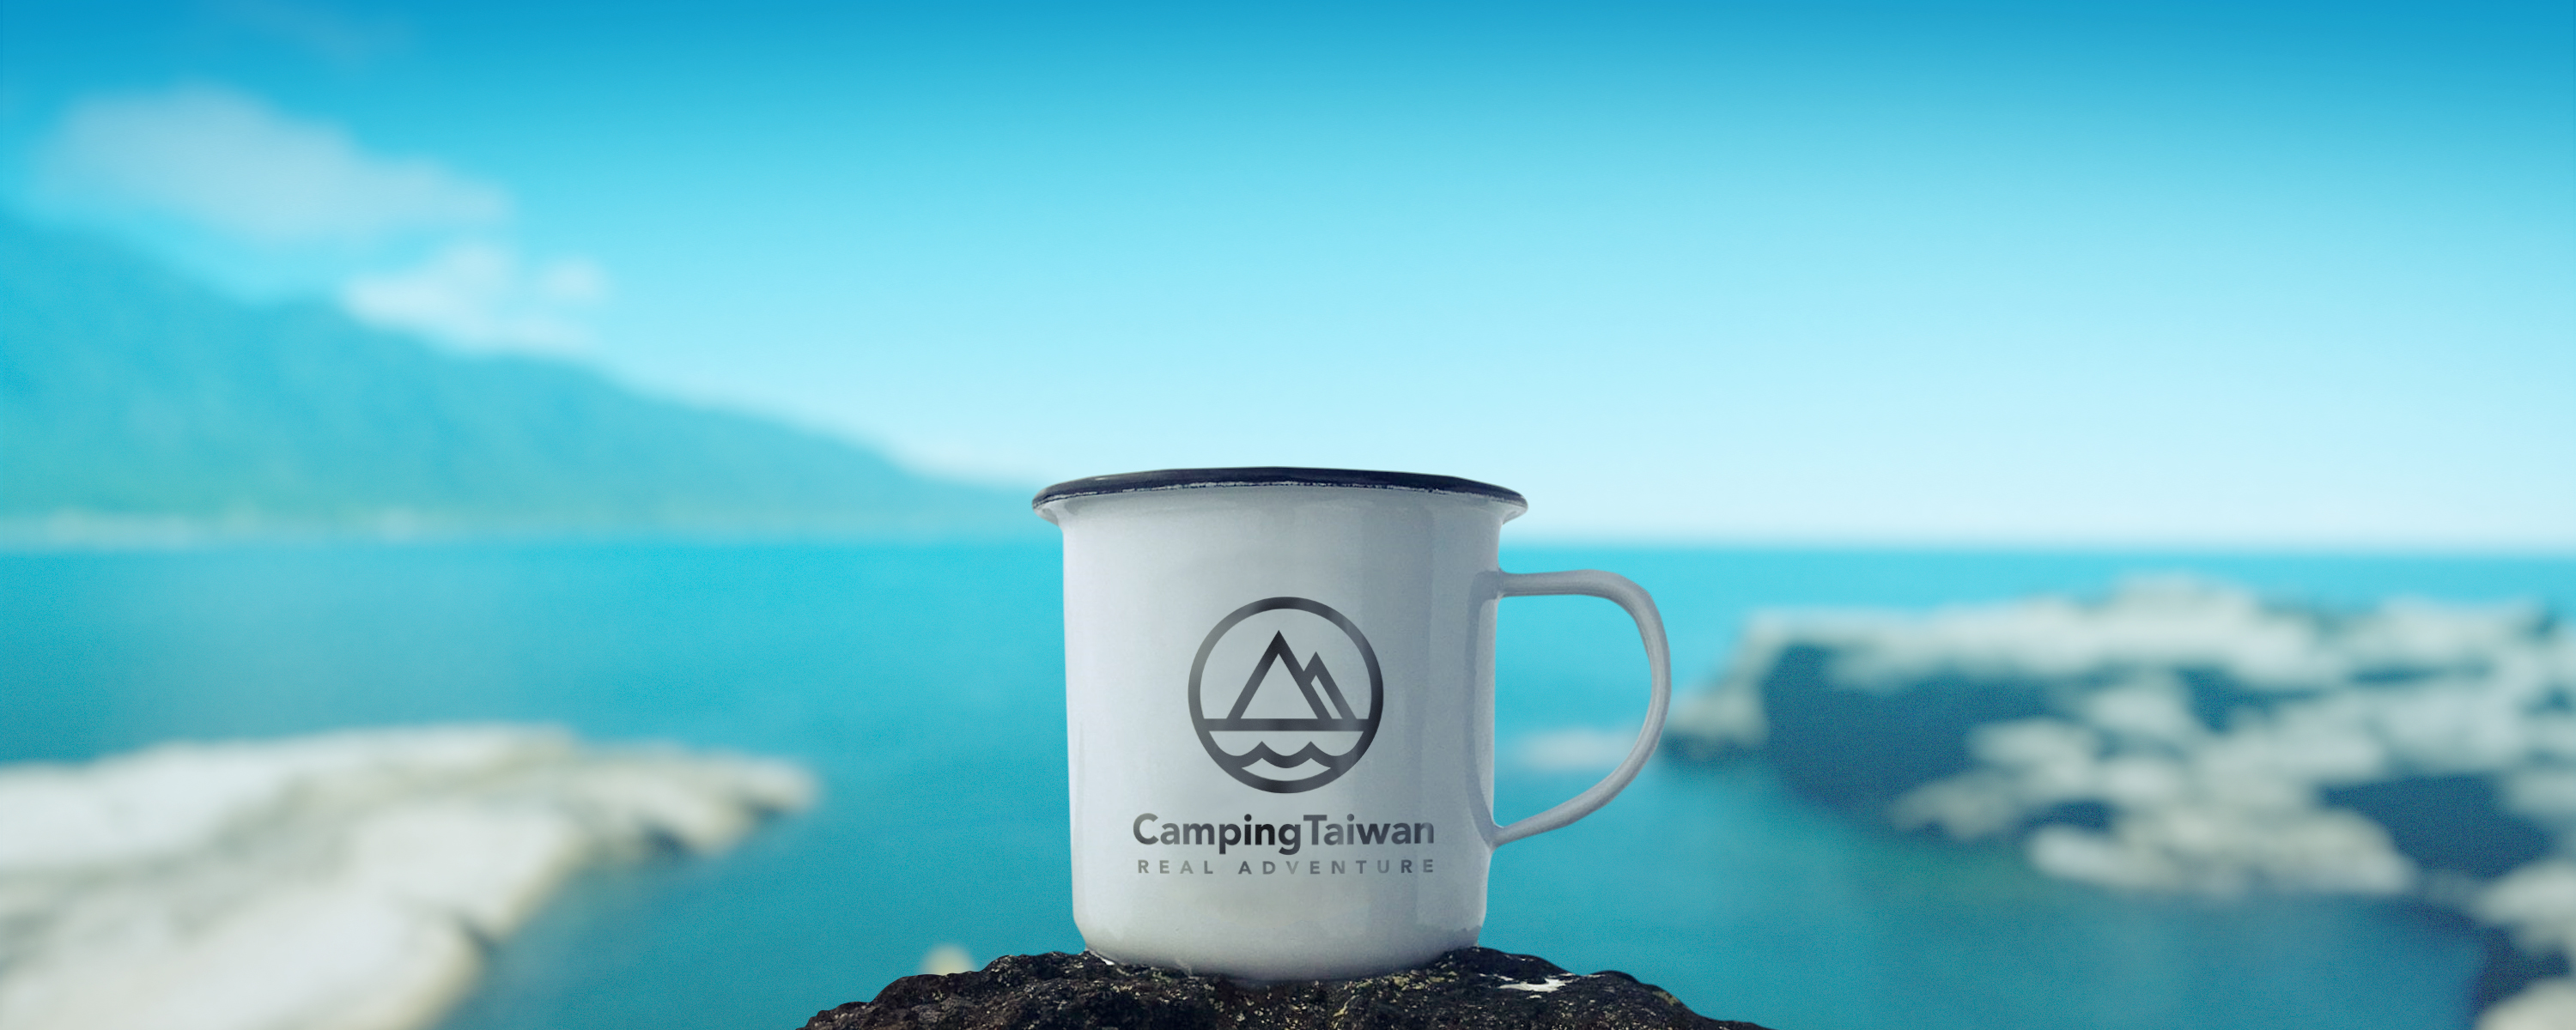 CampingTaiwan